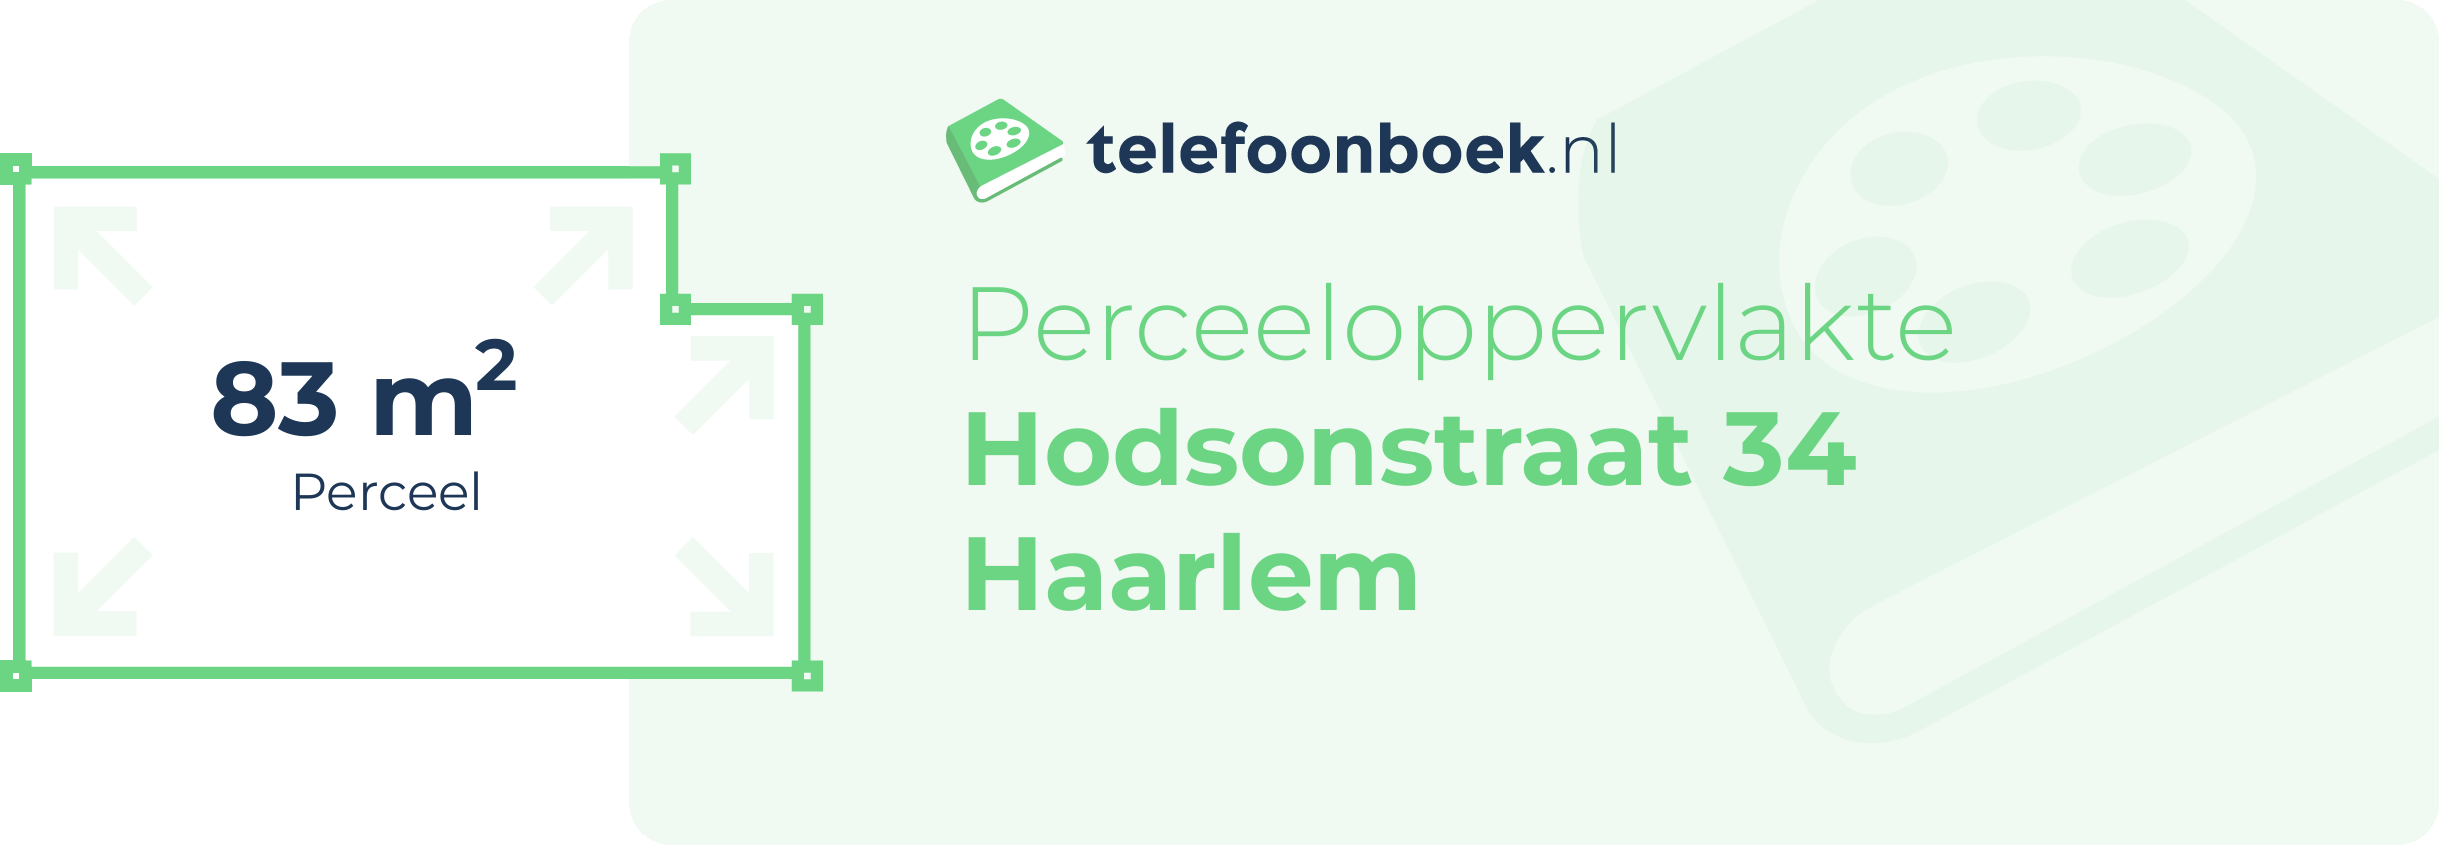 Perceeloppervlakte Hodsonstraat 34 Haarlem